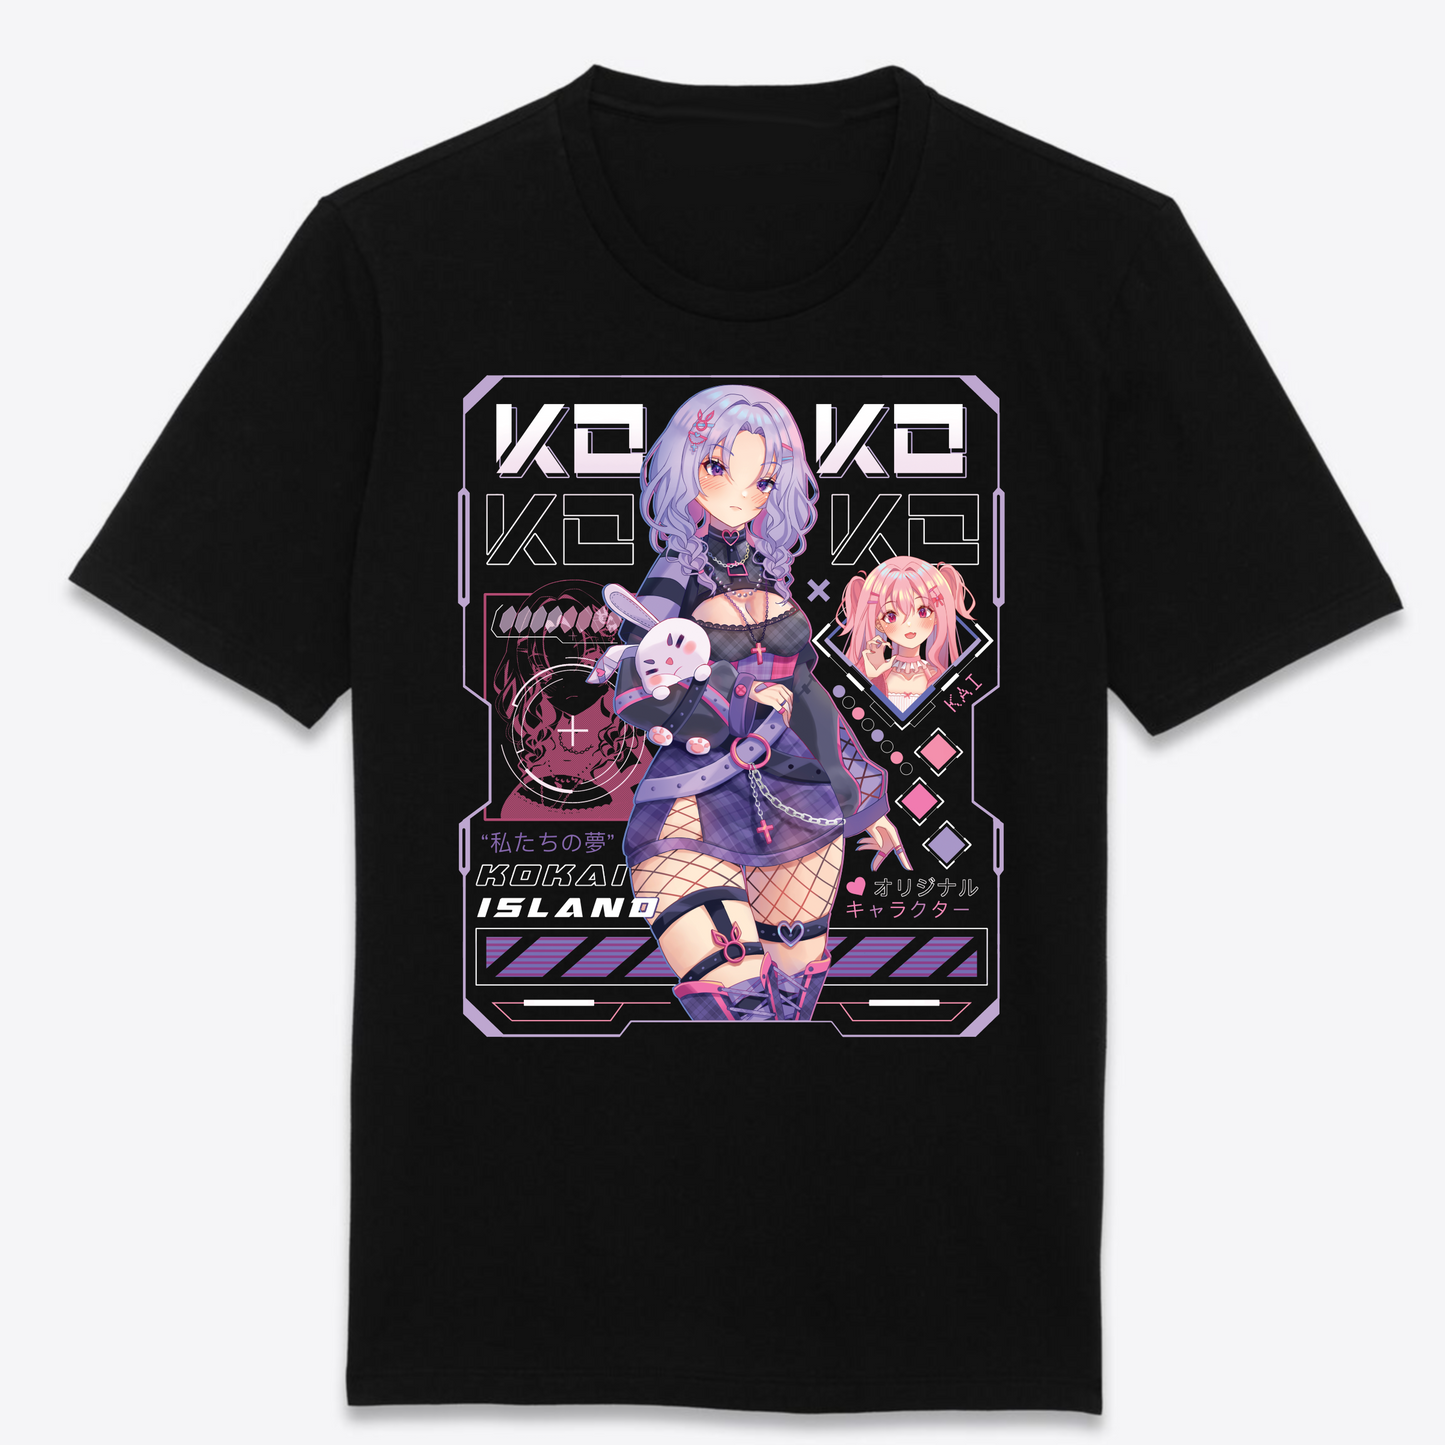 Koko T-Shirt